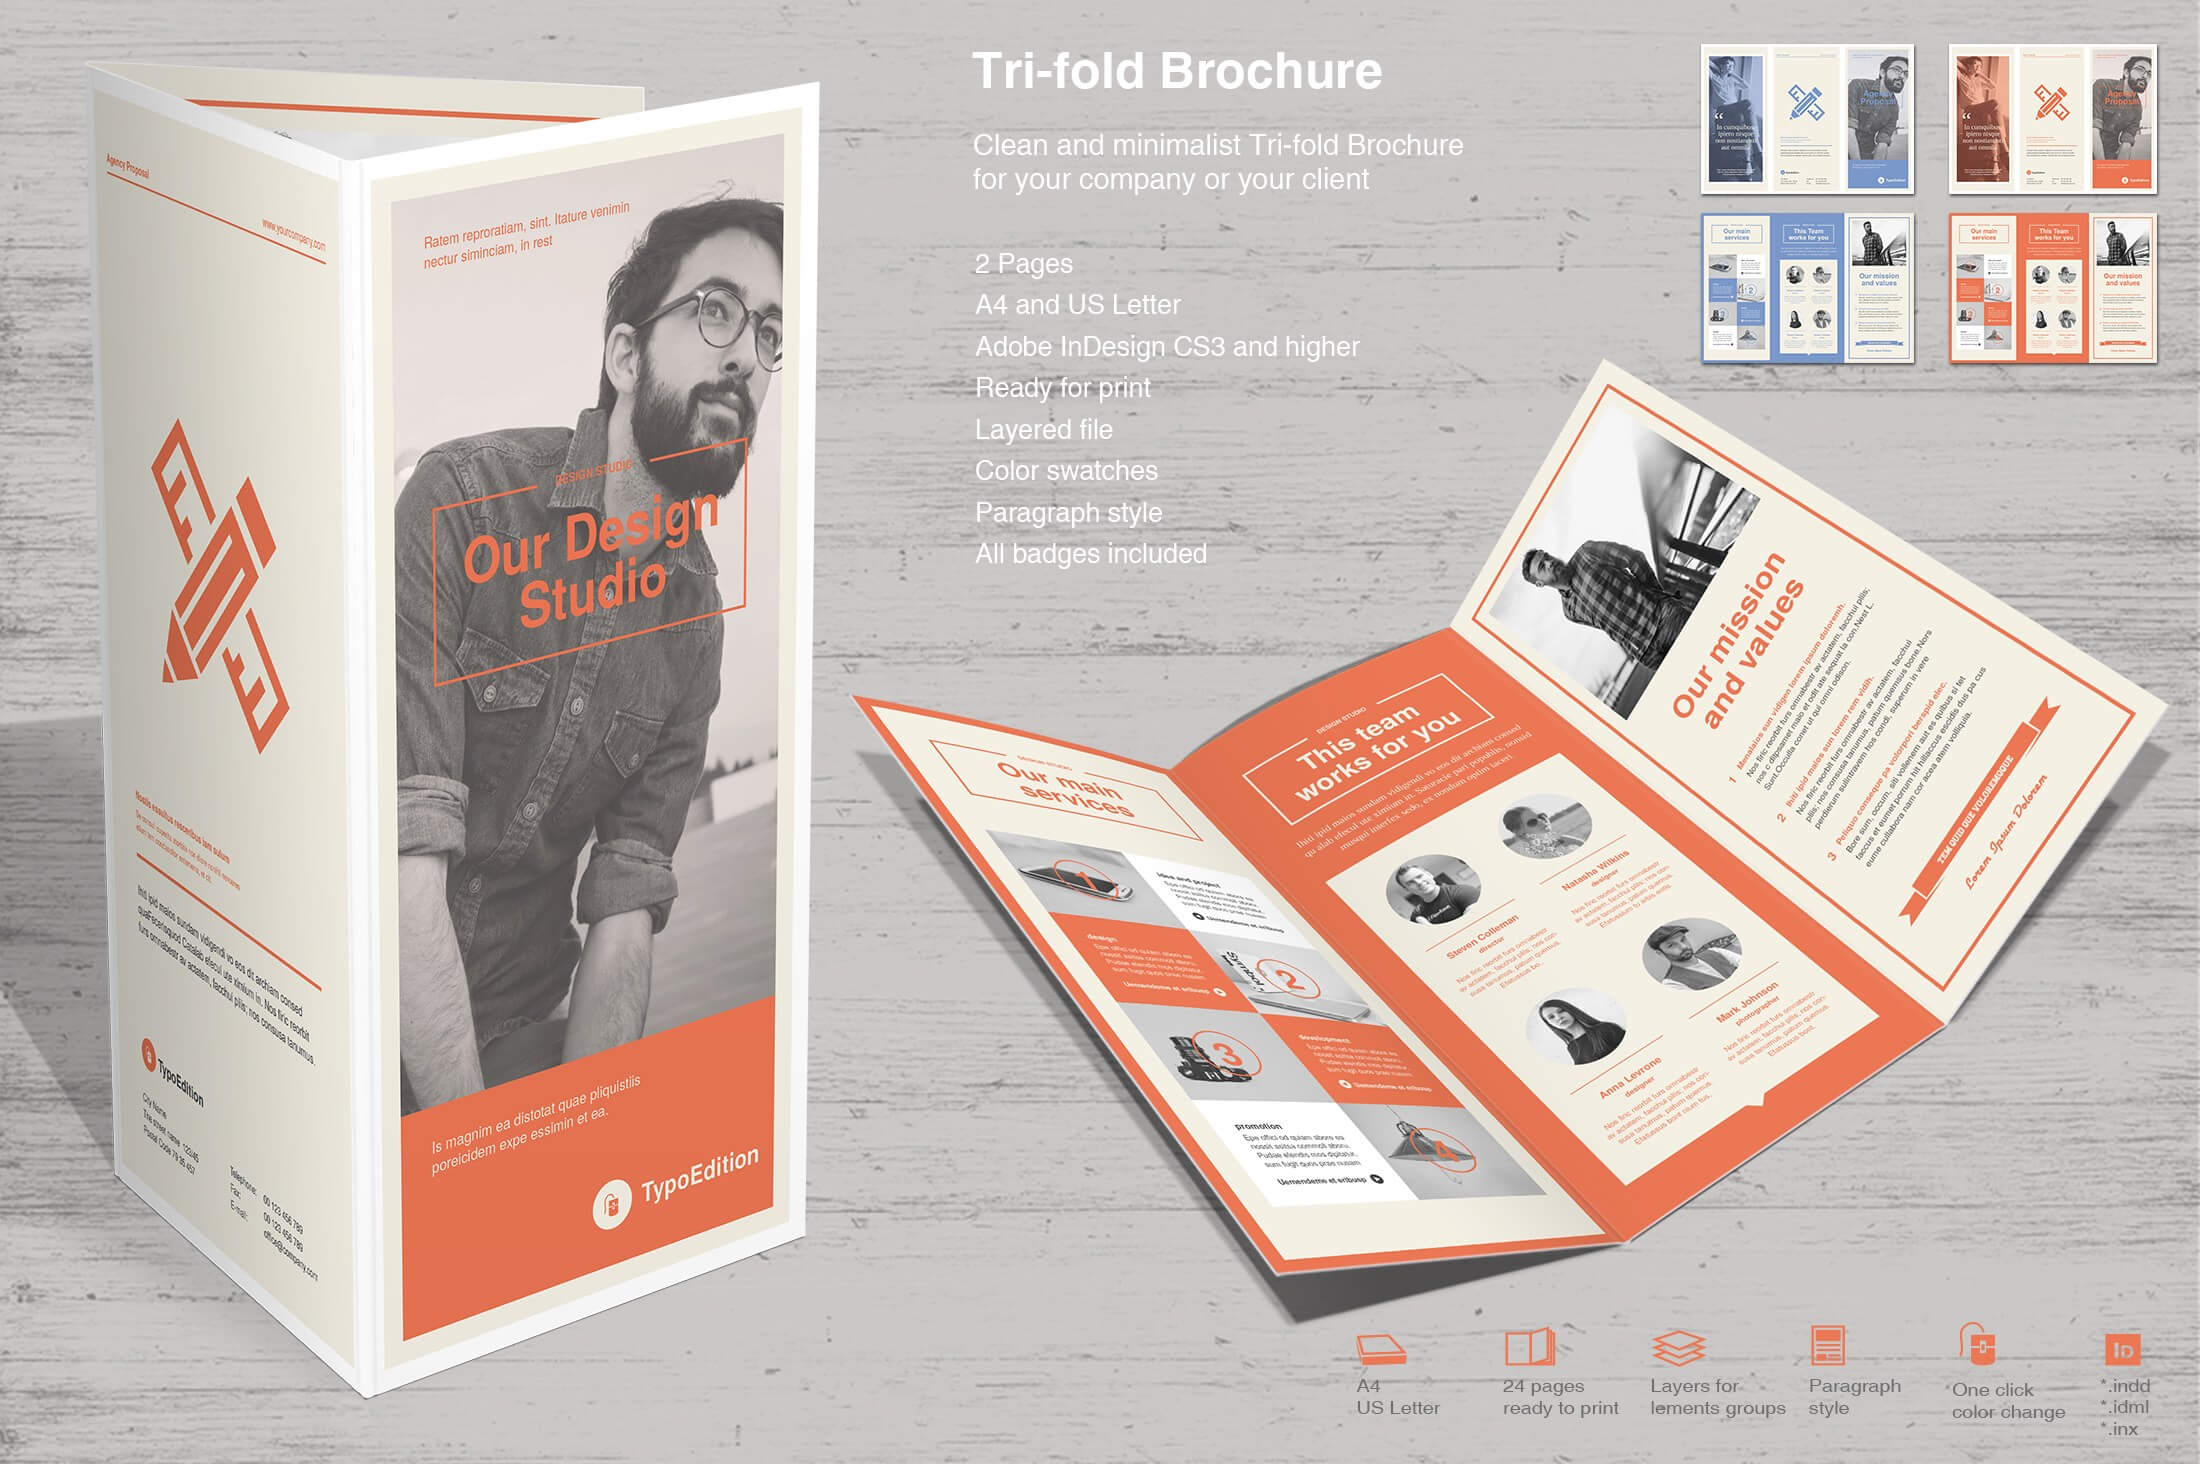 036 222Fghjfit22002C1464 Tri Fold Brochure Indesign Template With Adobe Indesign Tri Fold Brochure Template